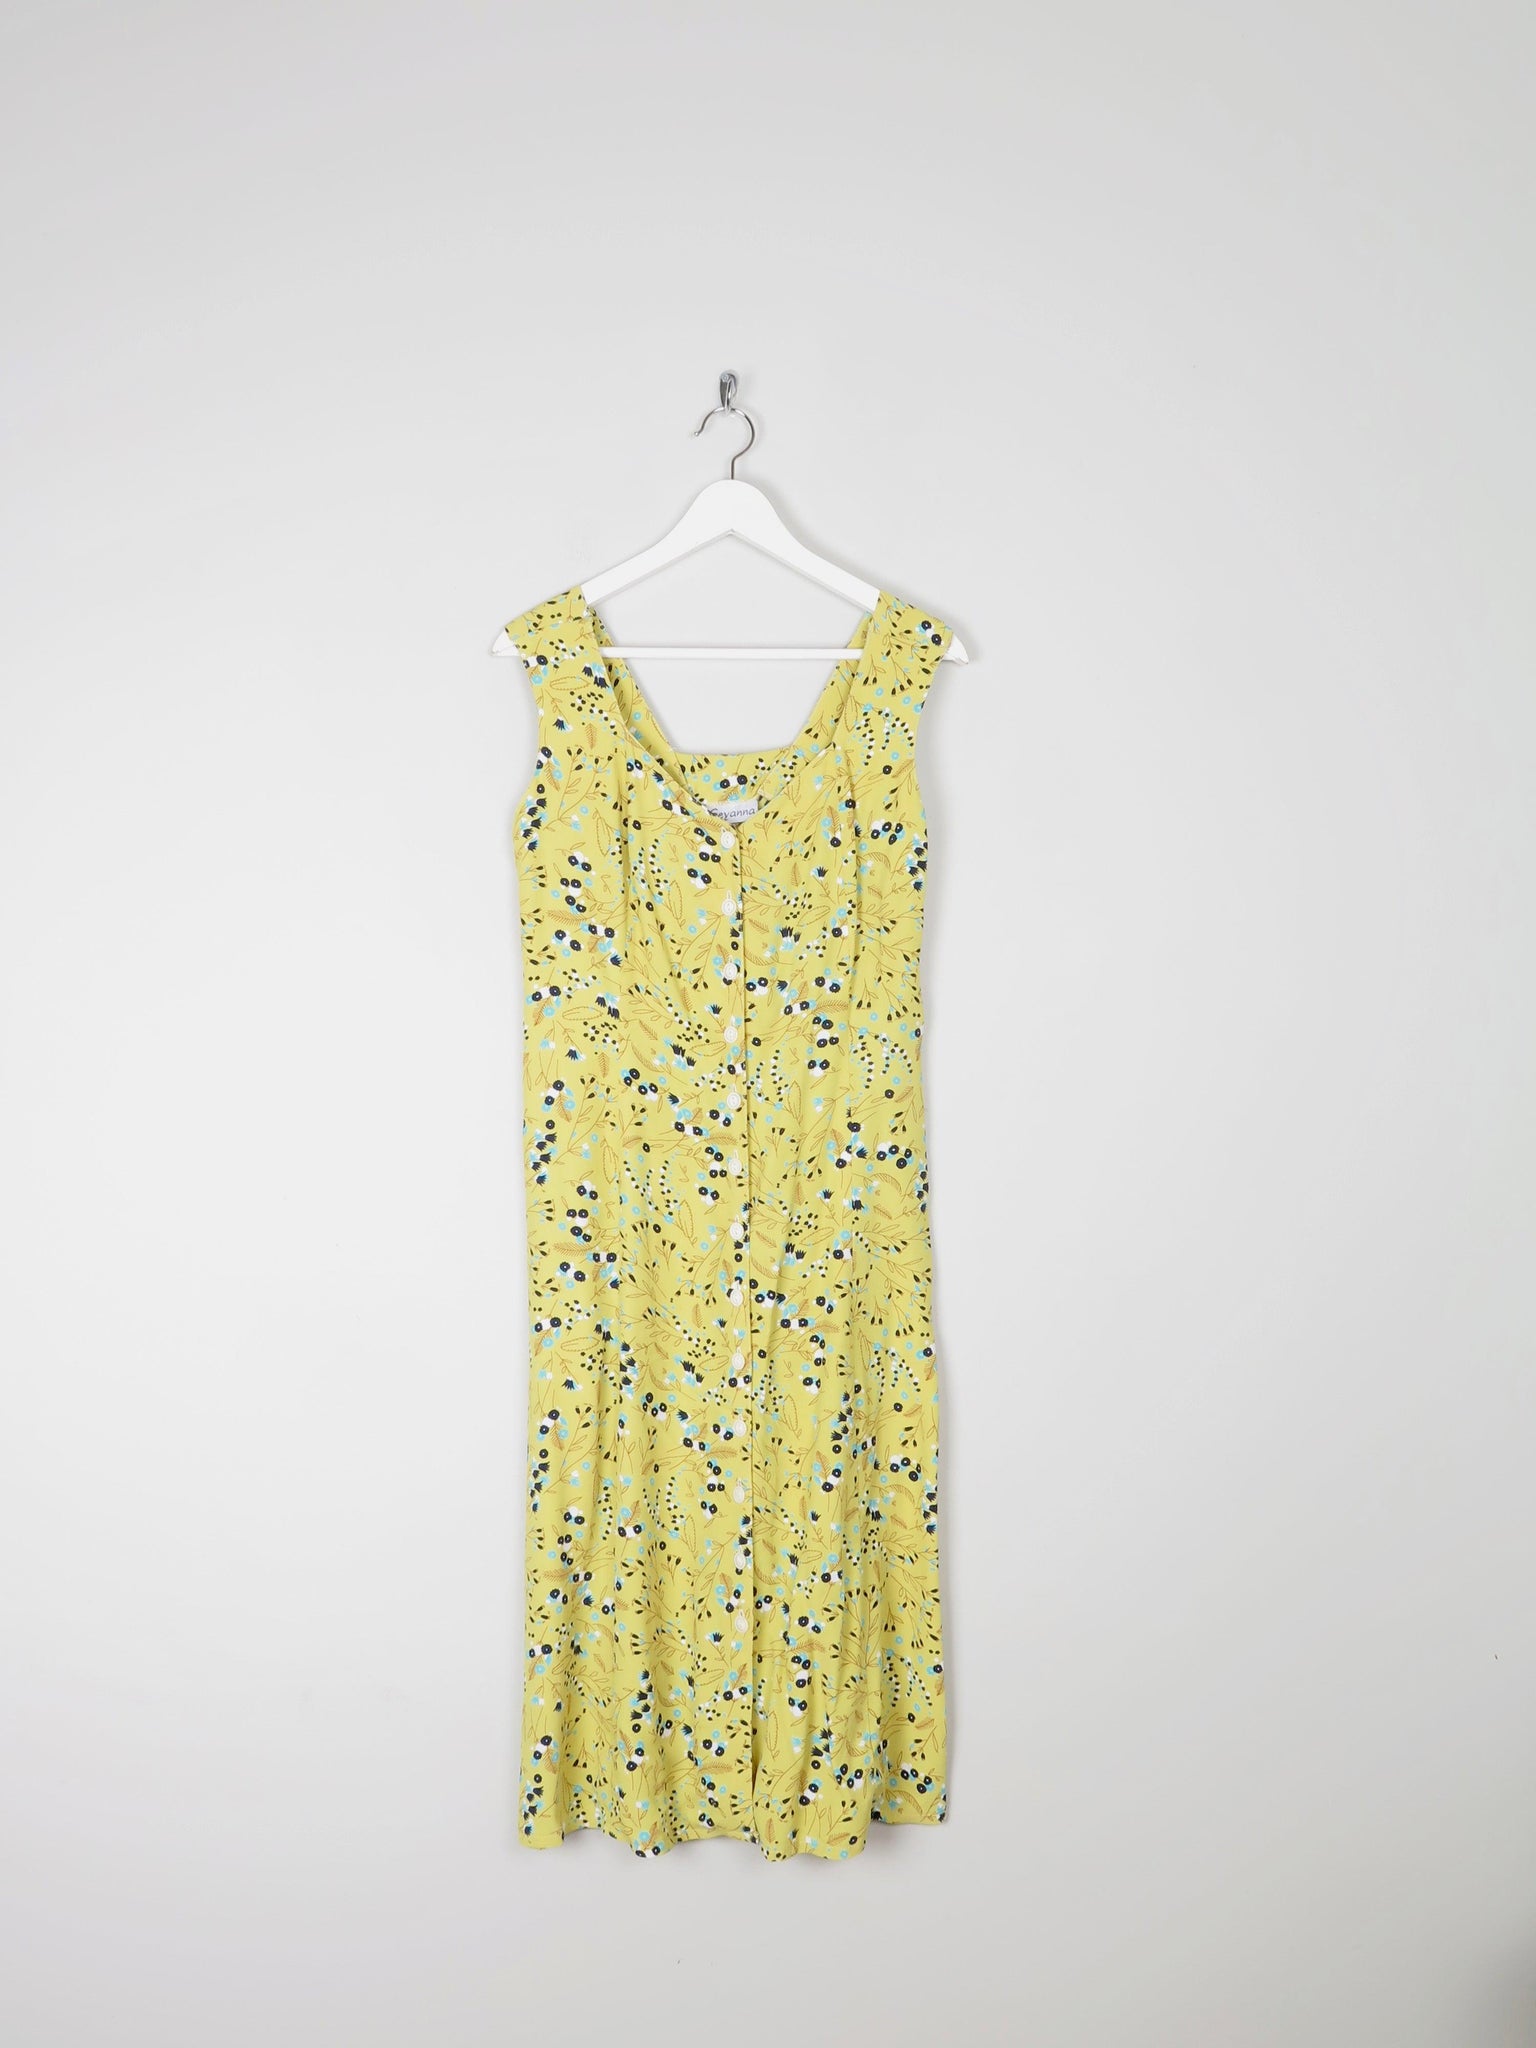 Lemon Green Printed Vintage 1950s style Tea Dress 10 - The Harlequin